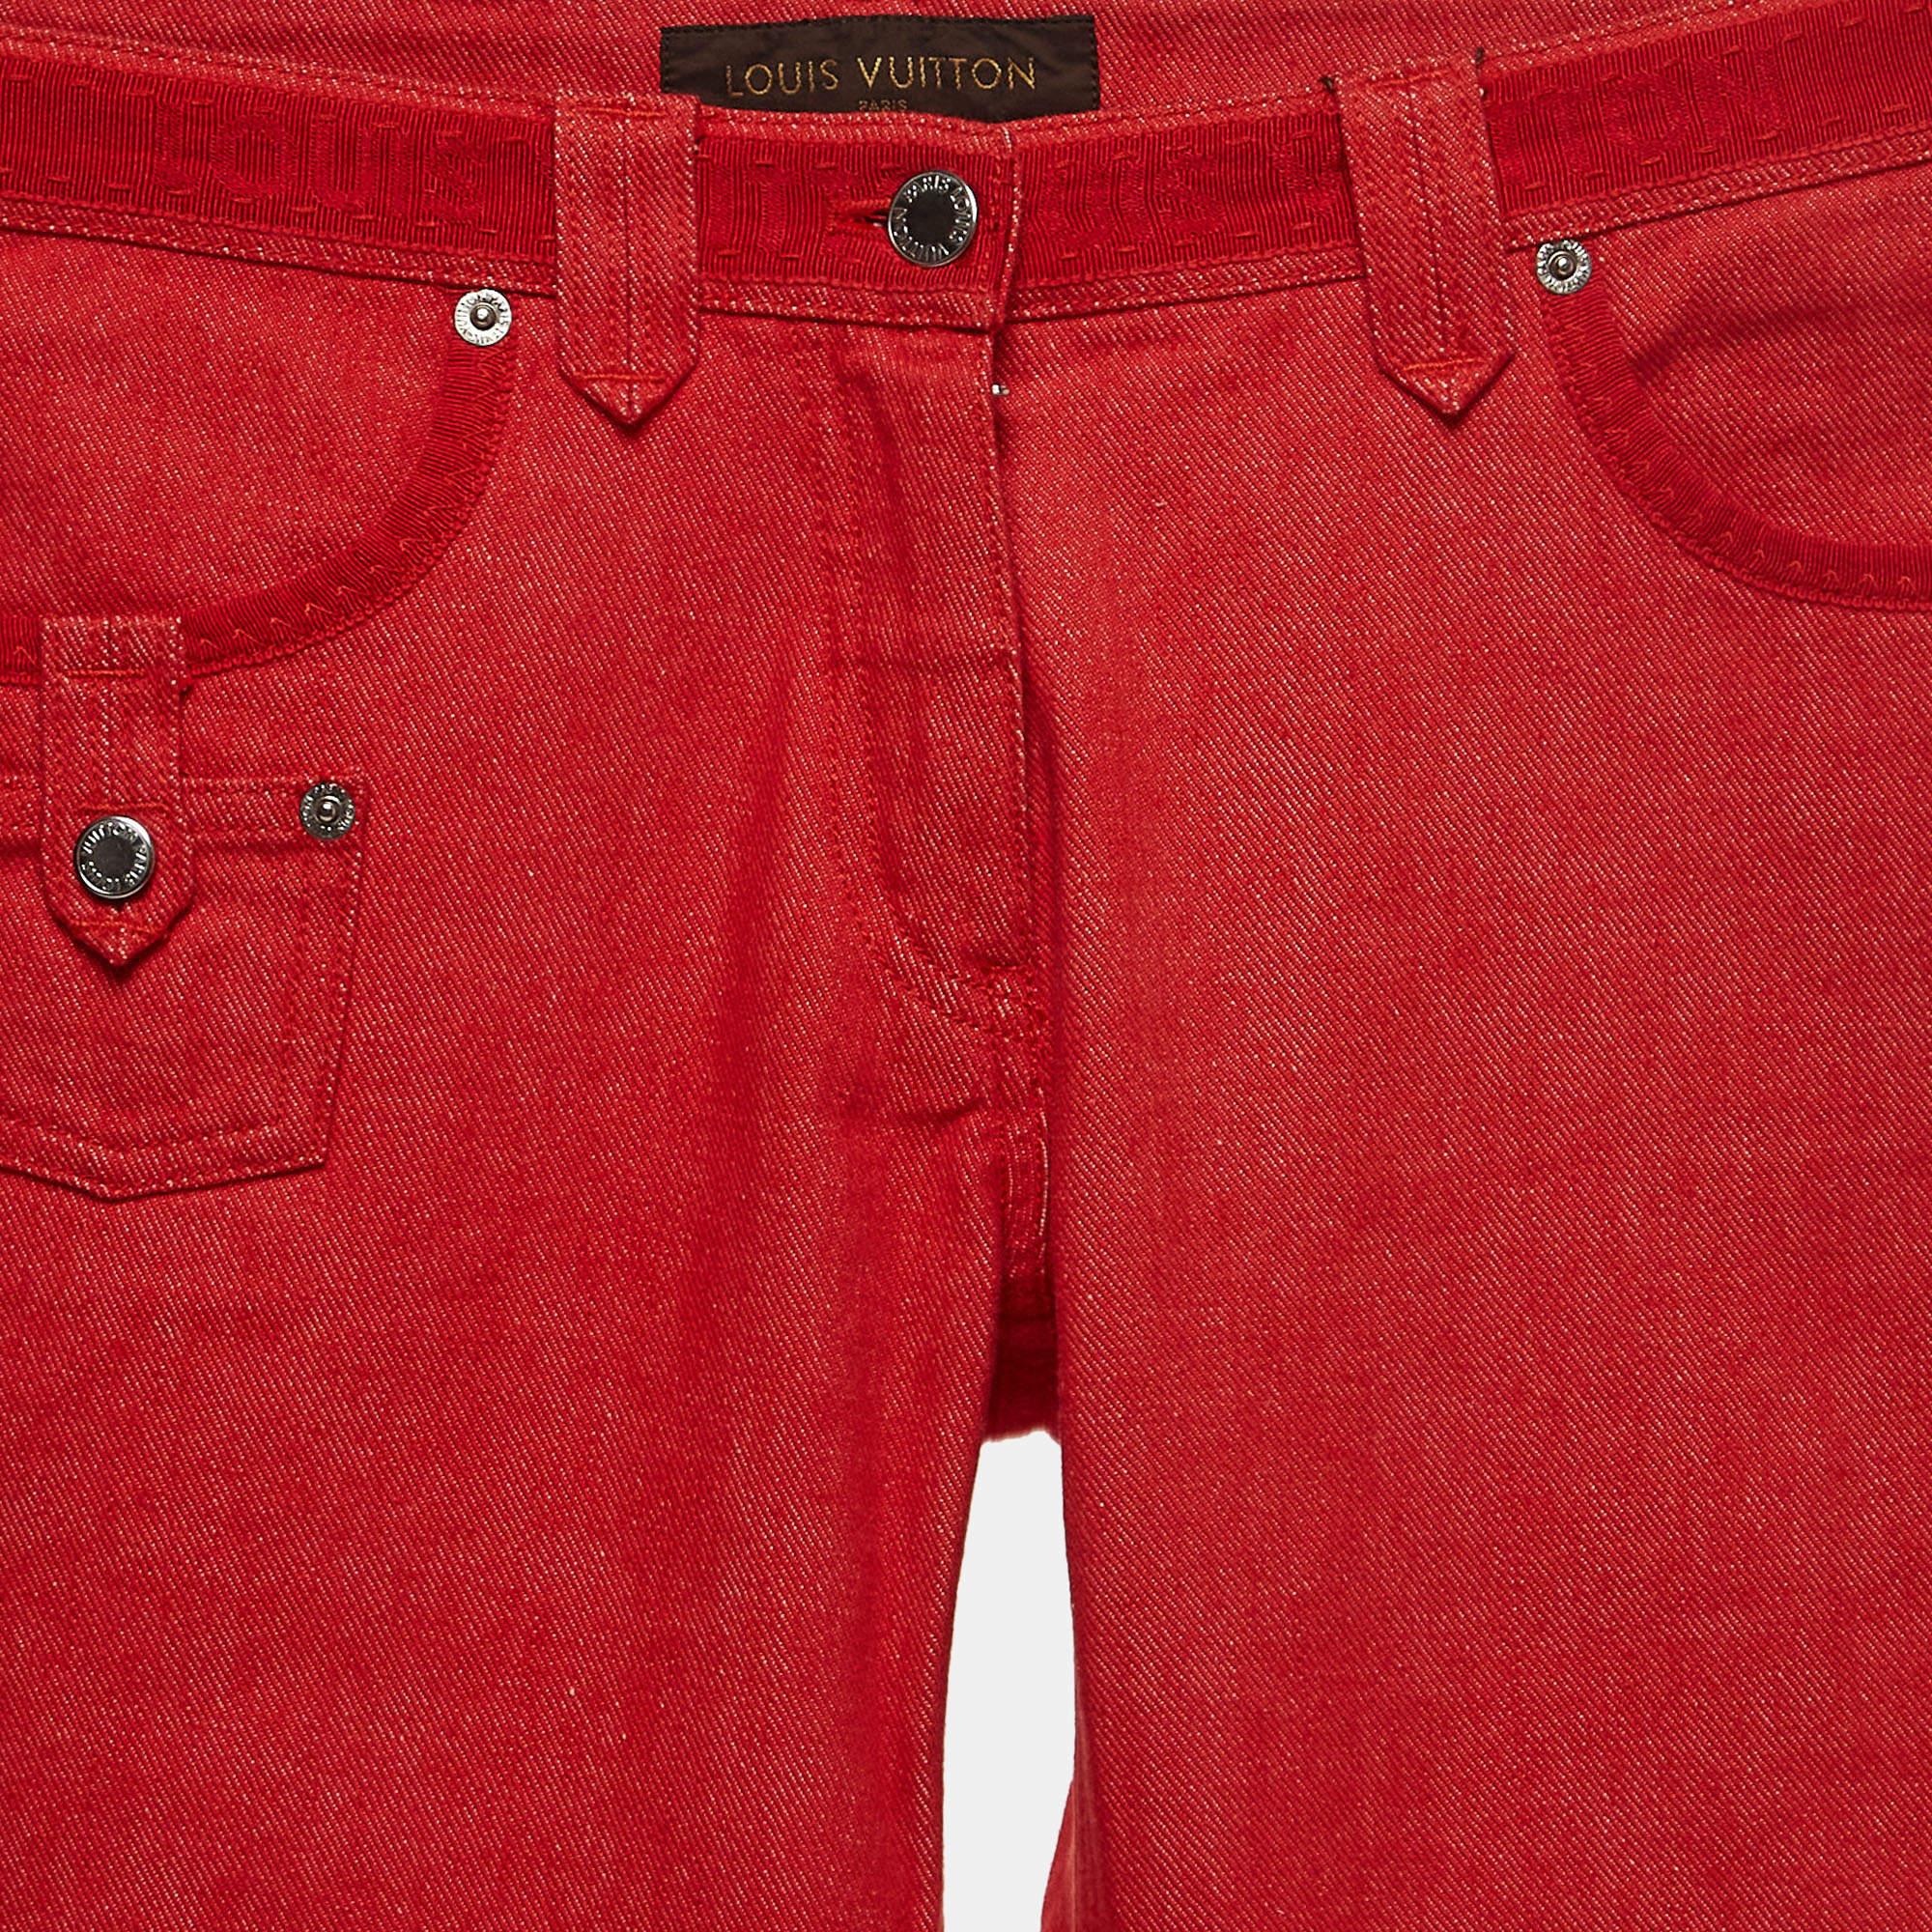 Women's Louis Vuitton Red Denim Jeans S Waist 30